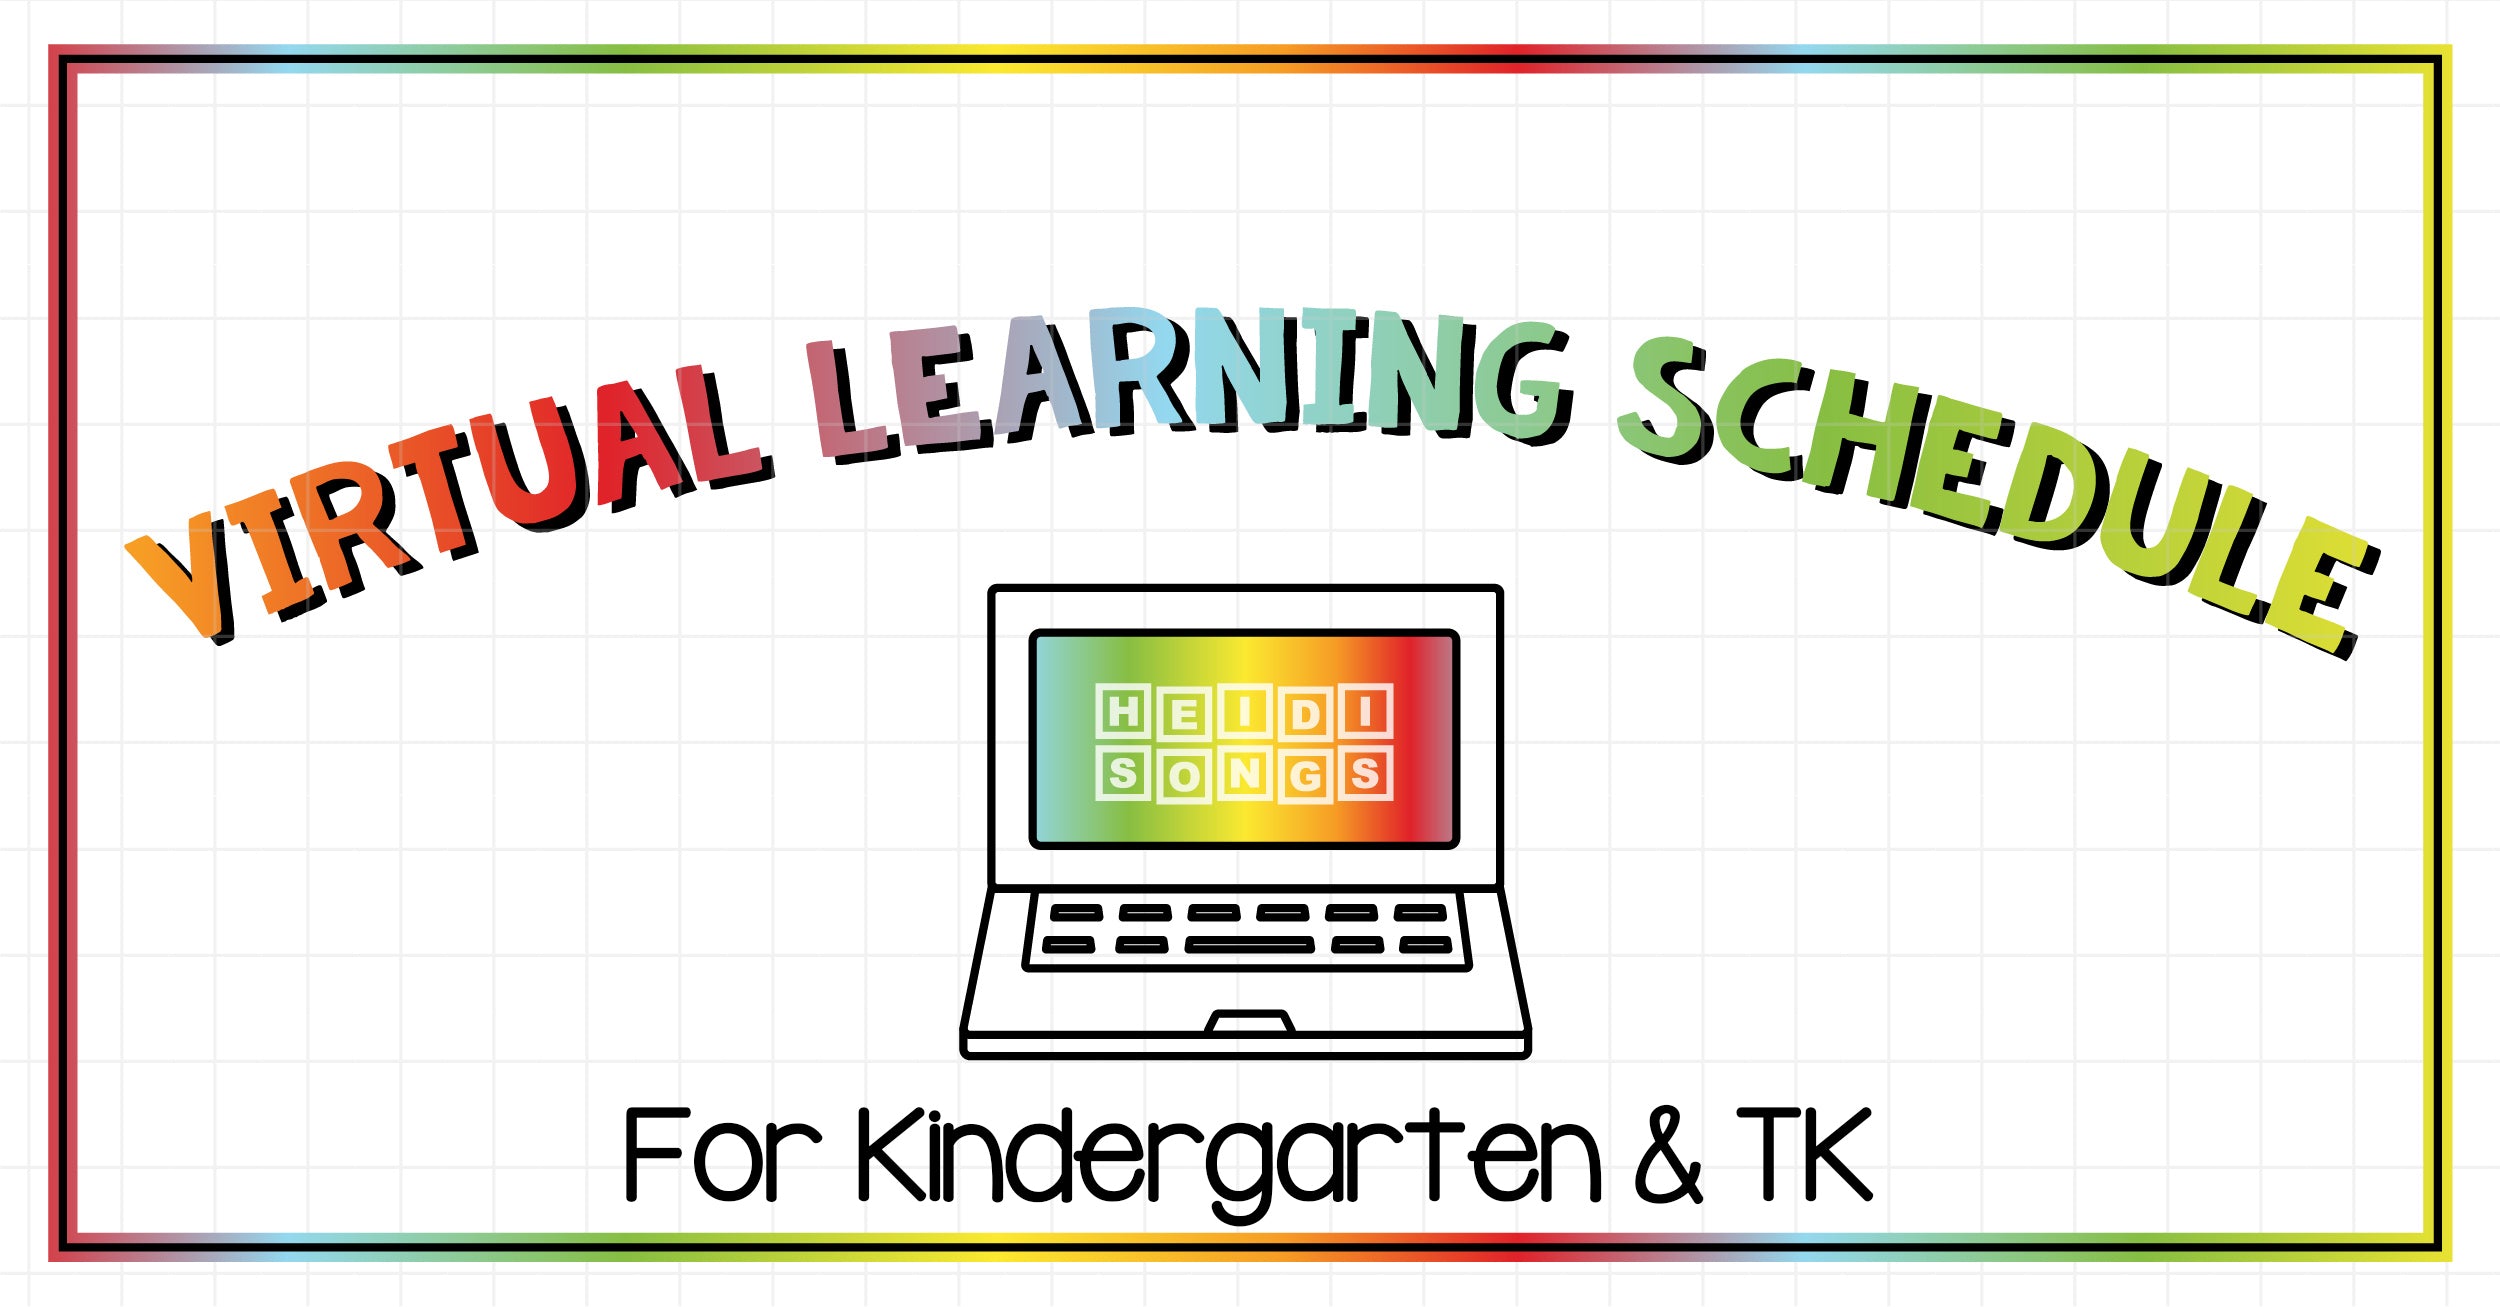 Heidi's Virtual Instruction Daily Schedule for Kindergarten & TK!